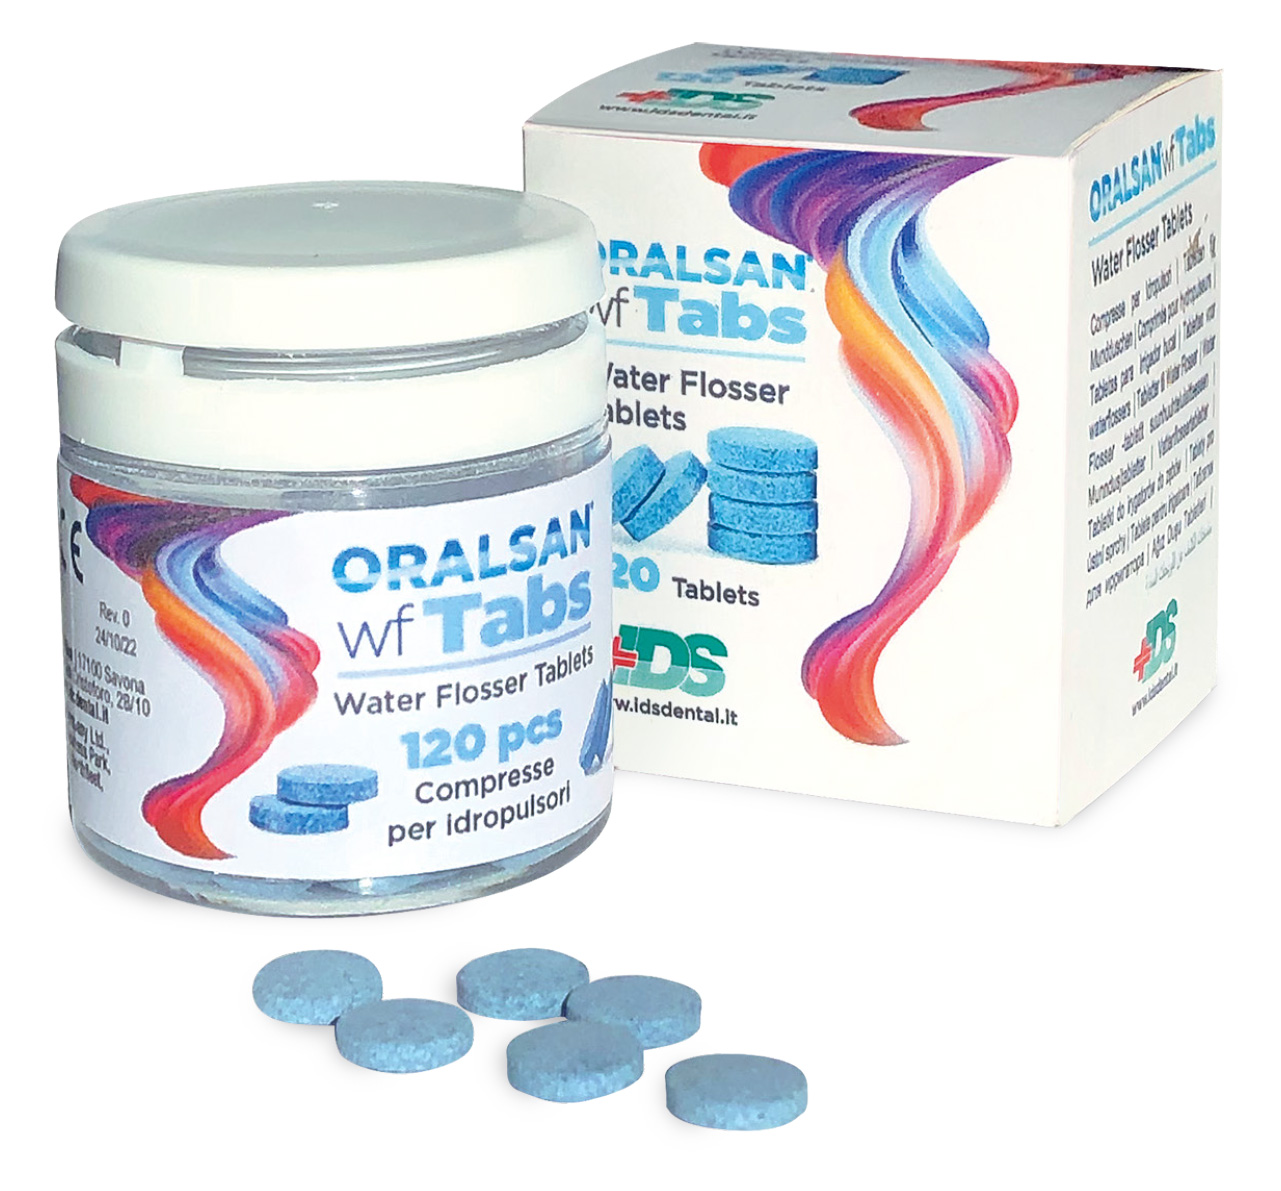 Oralsan wf Tabs - Compresse per idropulsori https://www.collinidentalpoint.it/